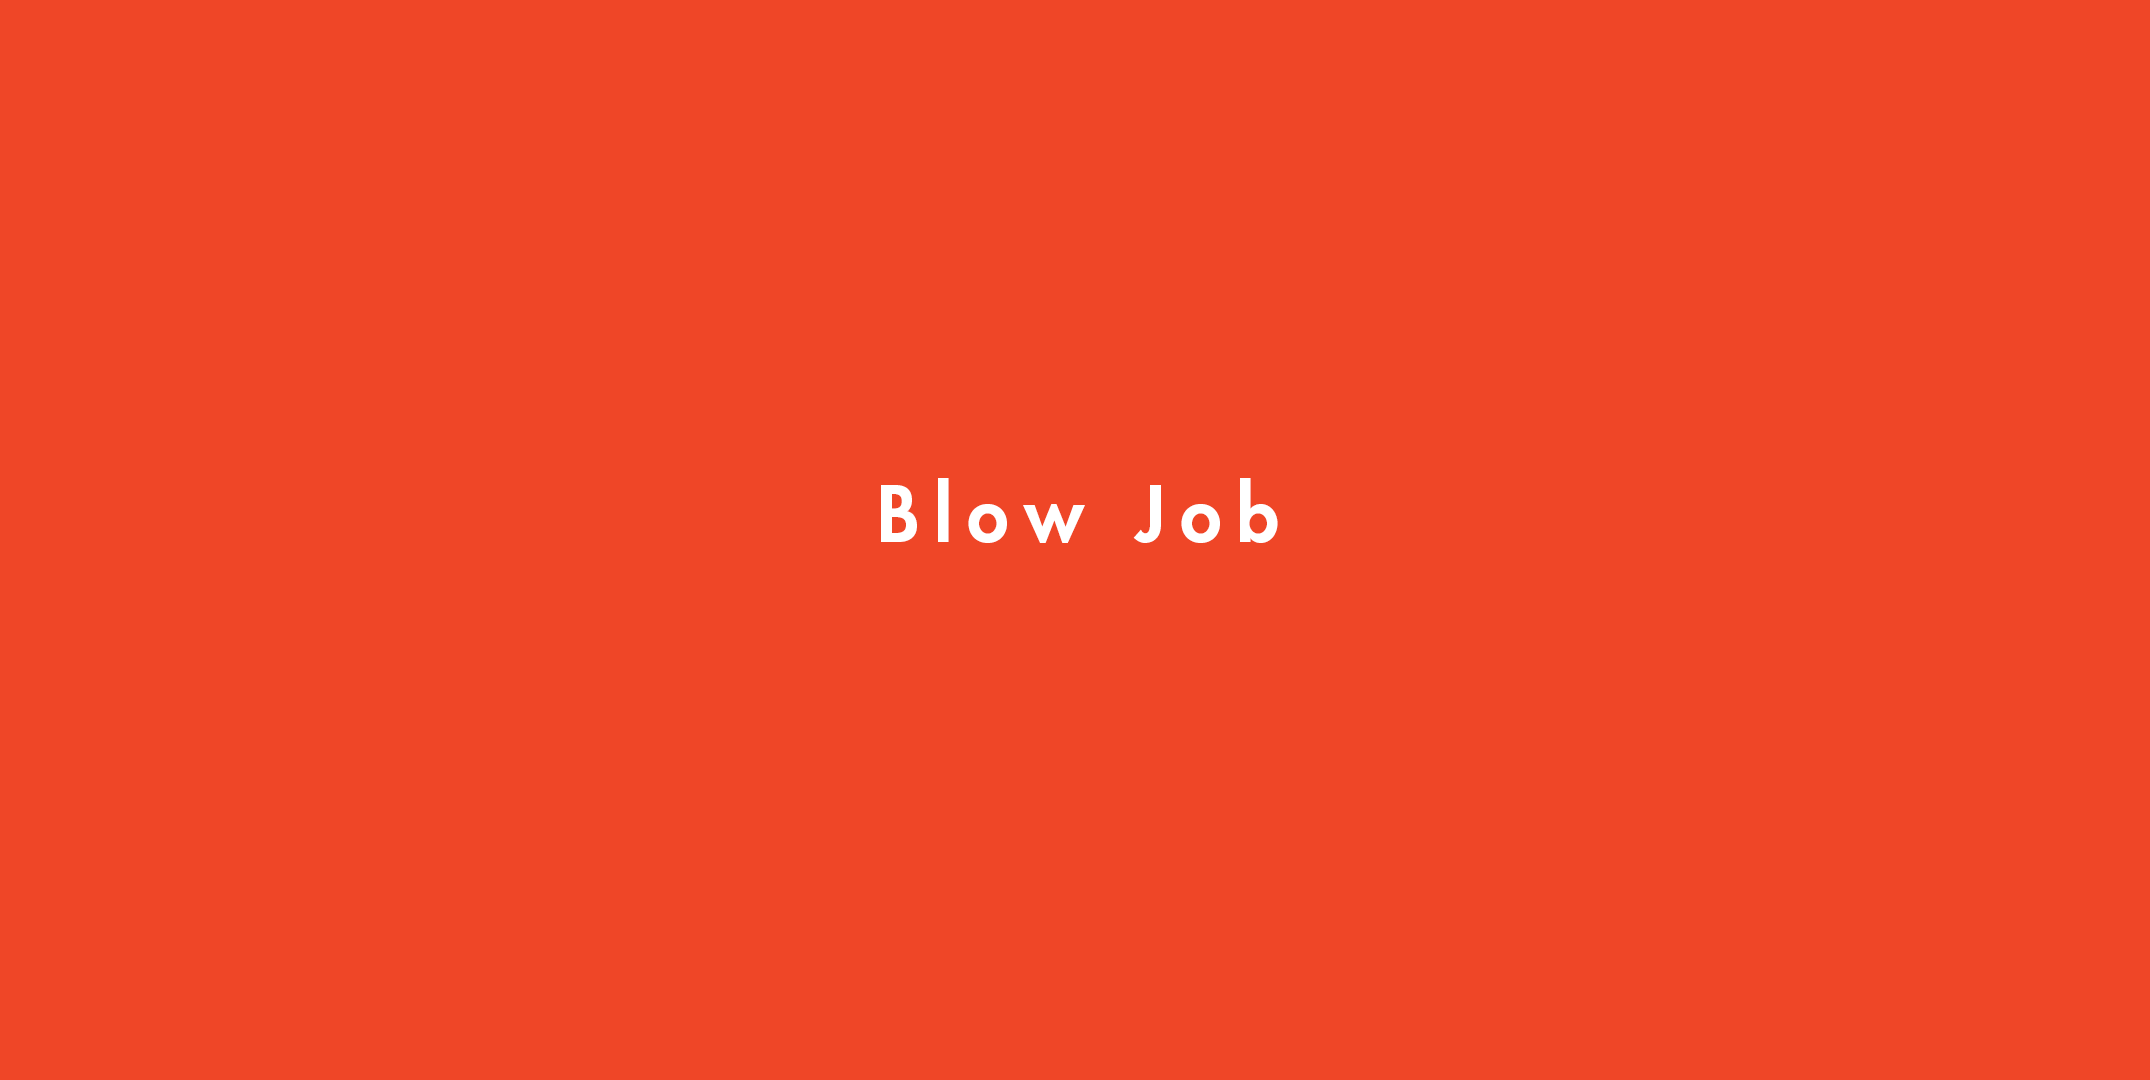 Blow Job Definition photo